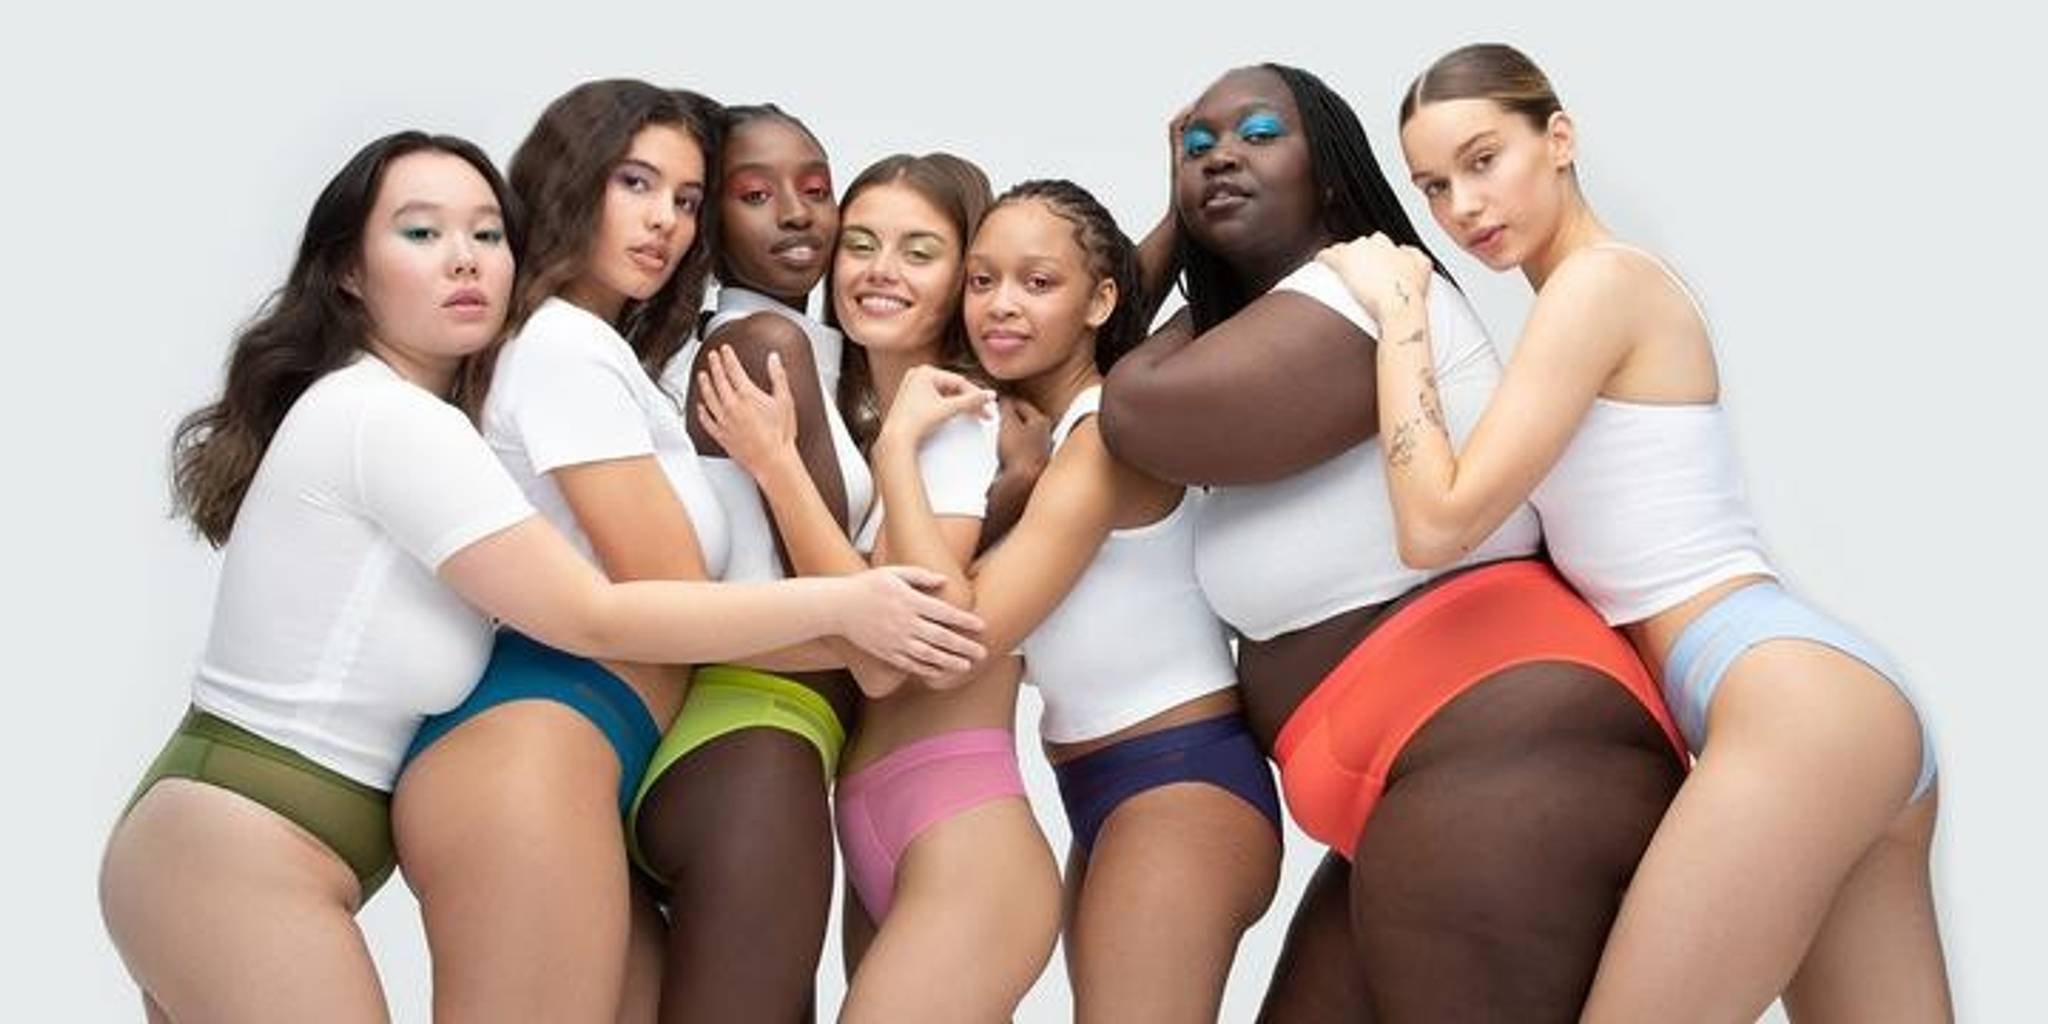 Parade's undergarments celebrate diverse body types